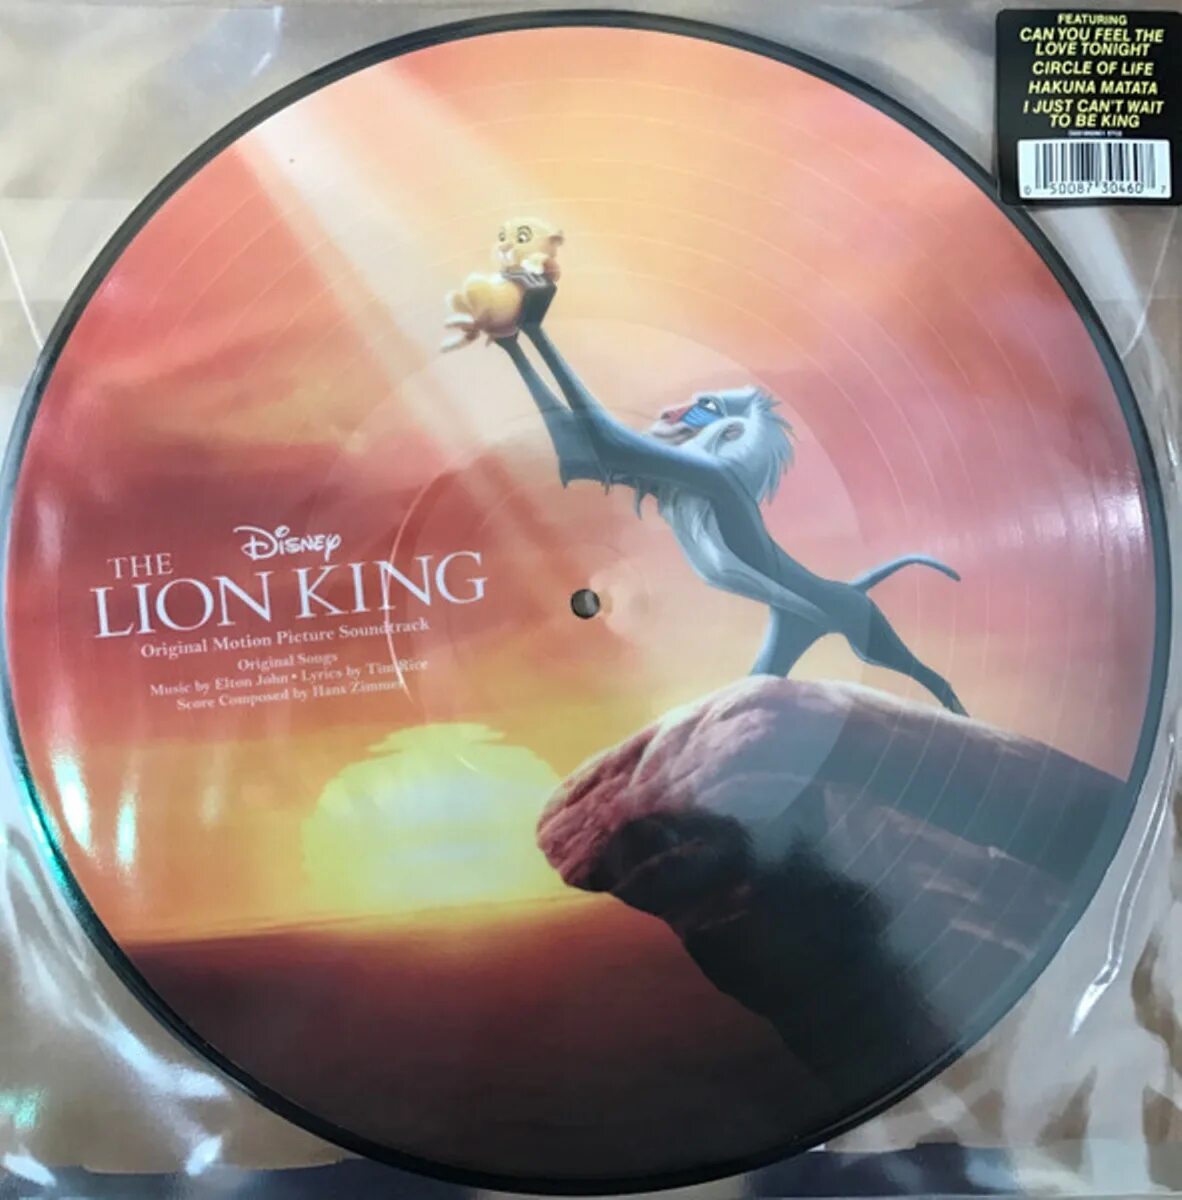 The original king. The Lion King OST Vinyl. Дисней records. King песня оригинал. За деньги пластинка.